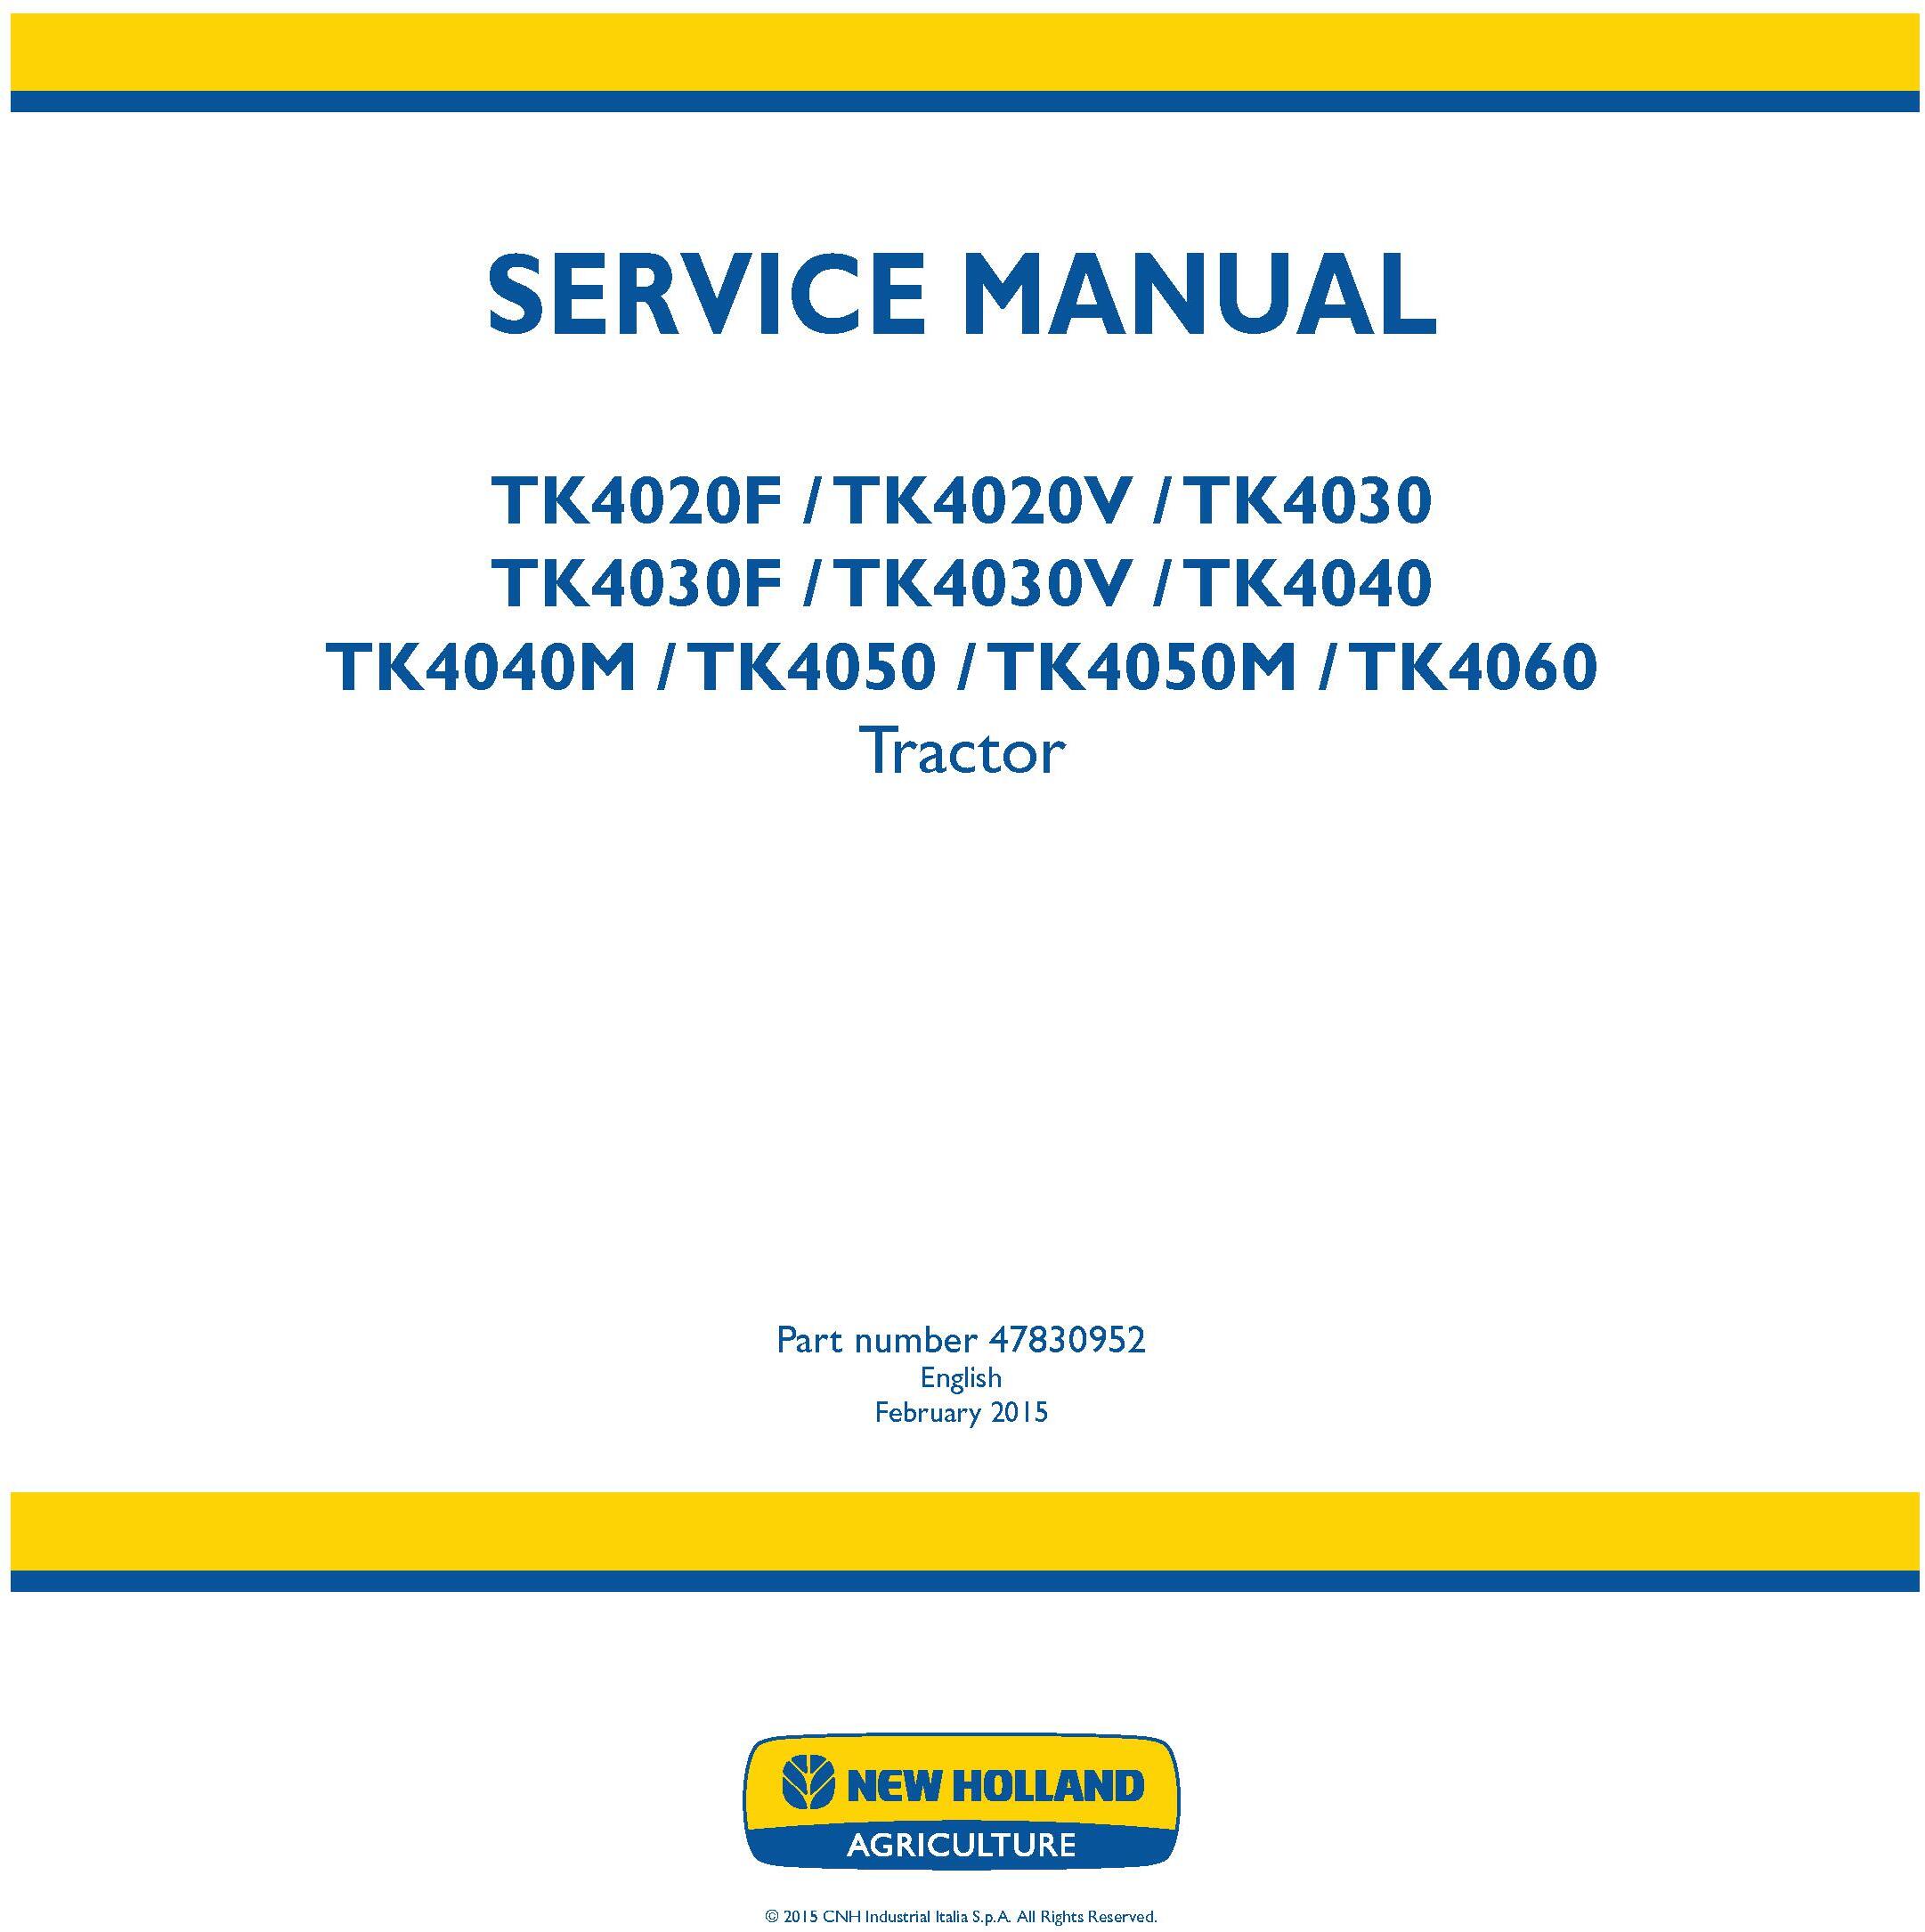 New Holland TK4020 F/V, TK4030 / F/V, TK4040 /M, TK4050 /M, TK4060 Crawler Tractor Service Manual - 19419